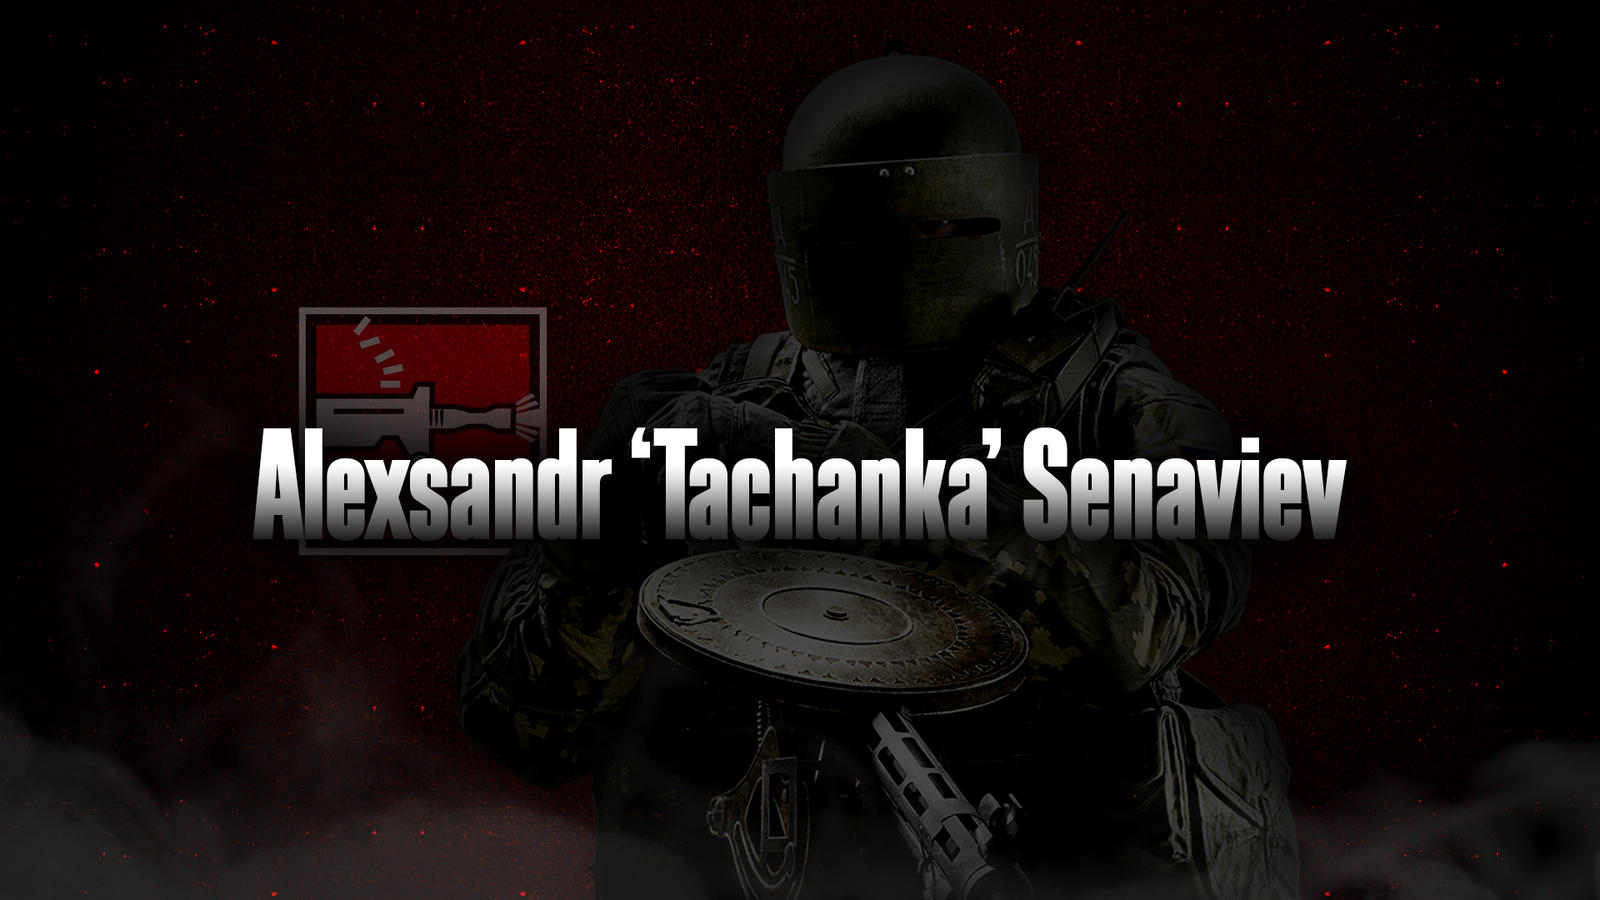 Tachanka Background